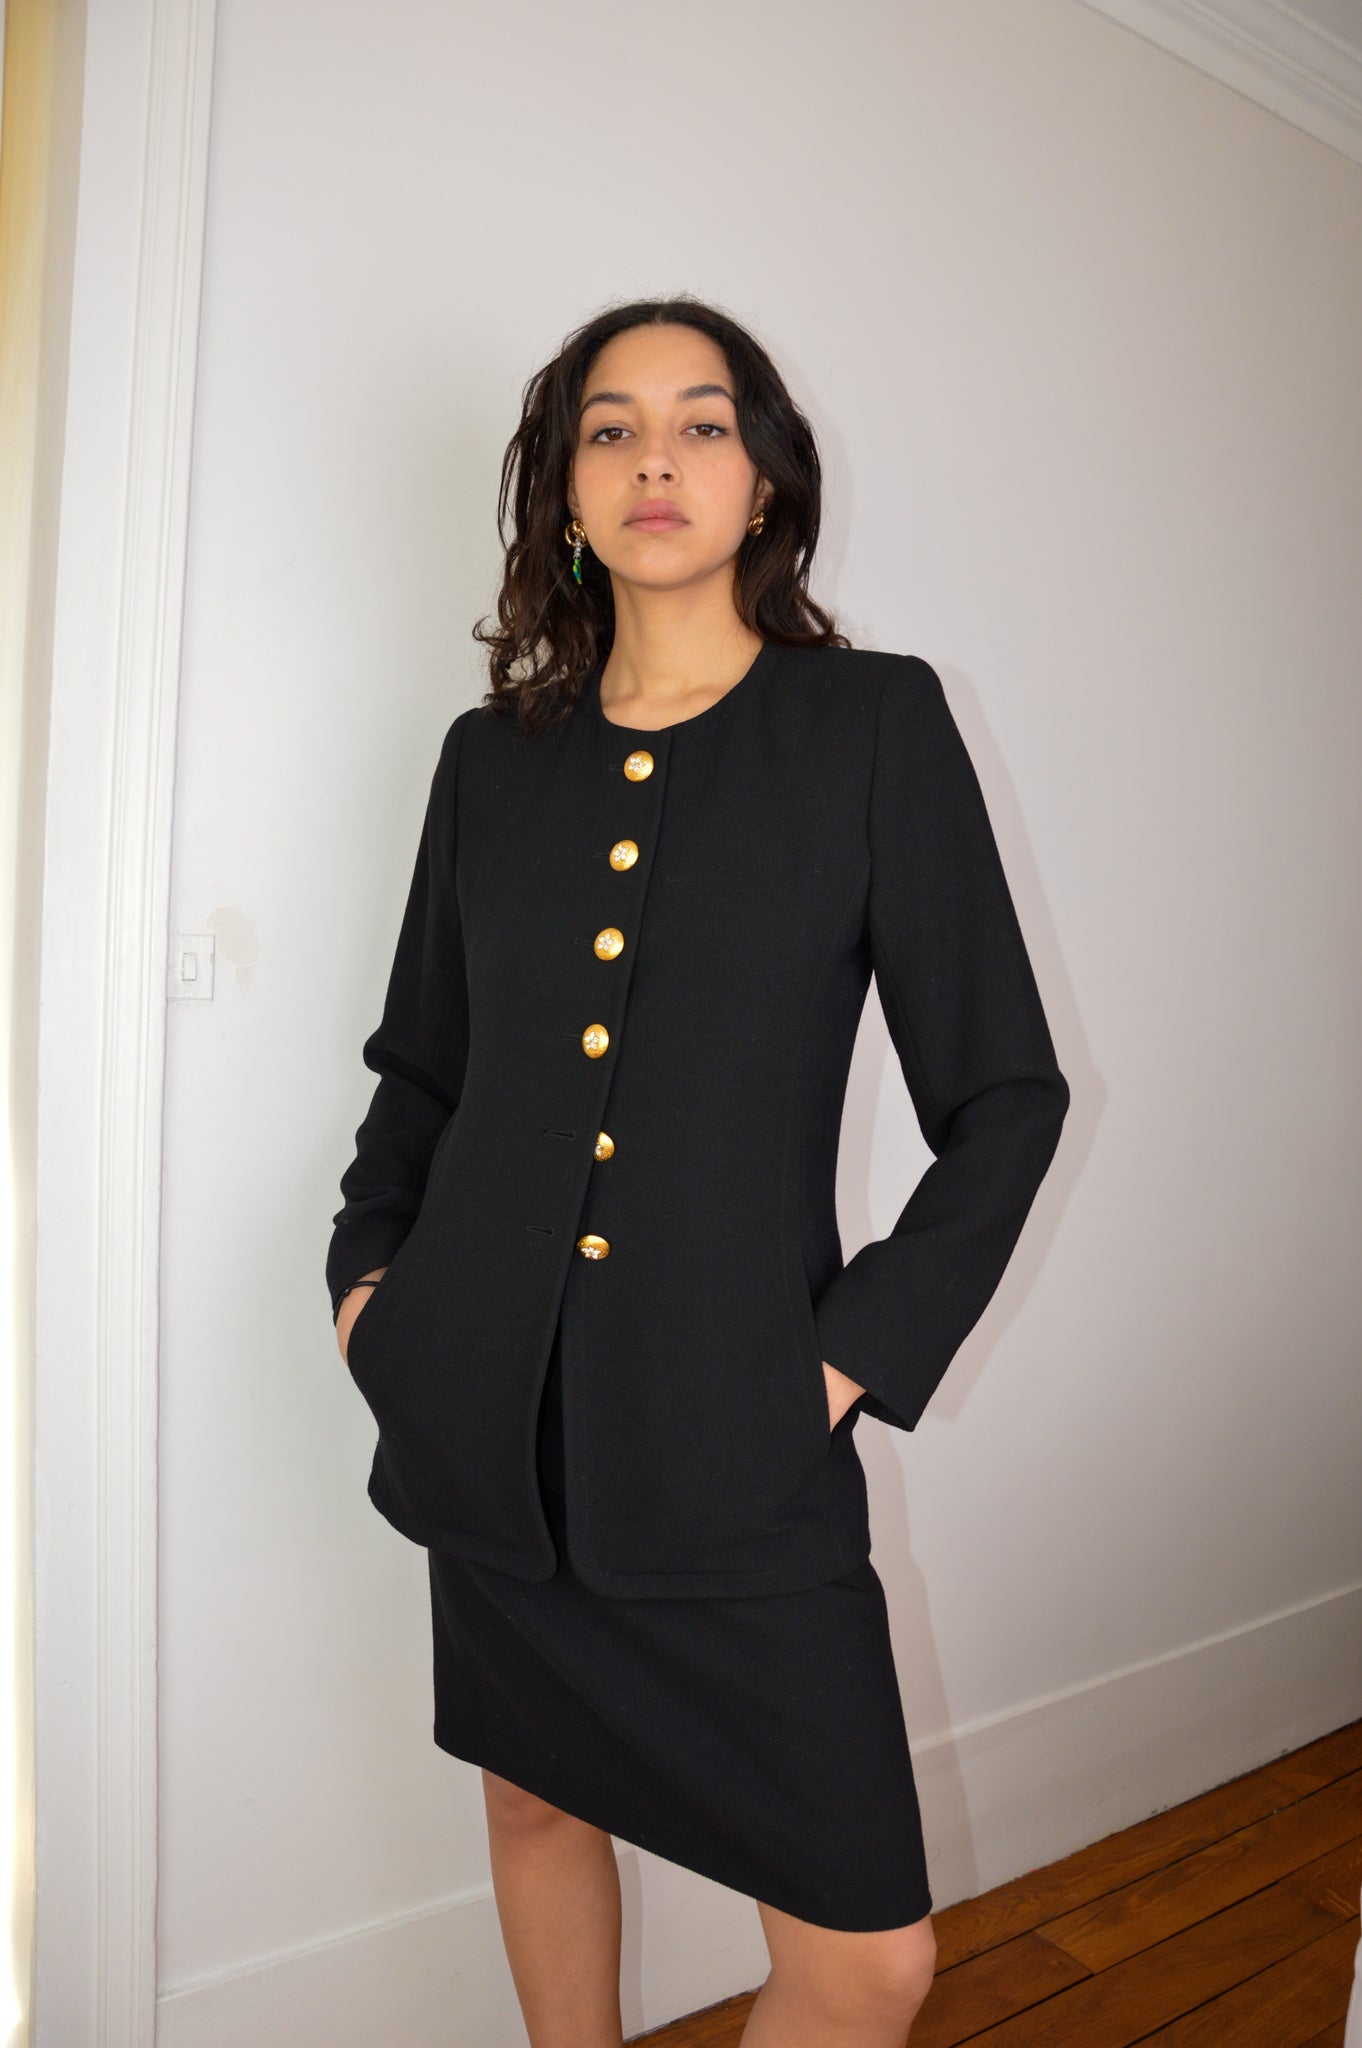 Yves Saint Laurent - Rive Gauche - Black wool crepe skirt suit